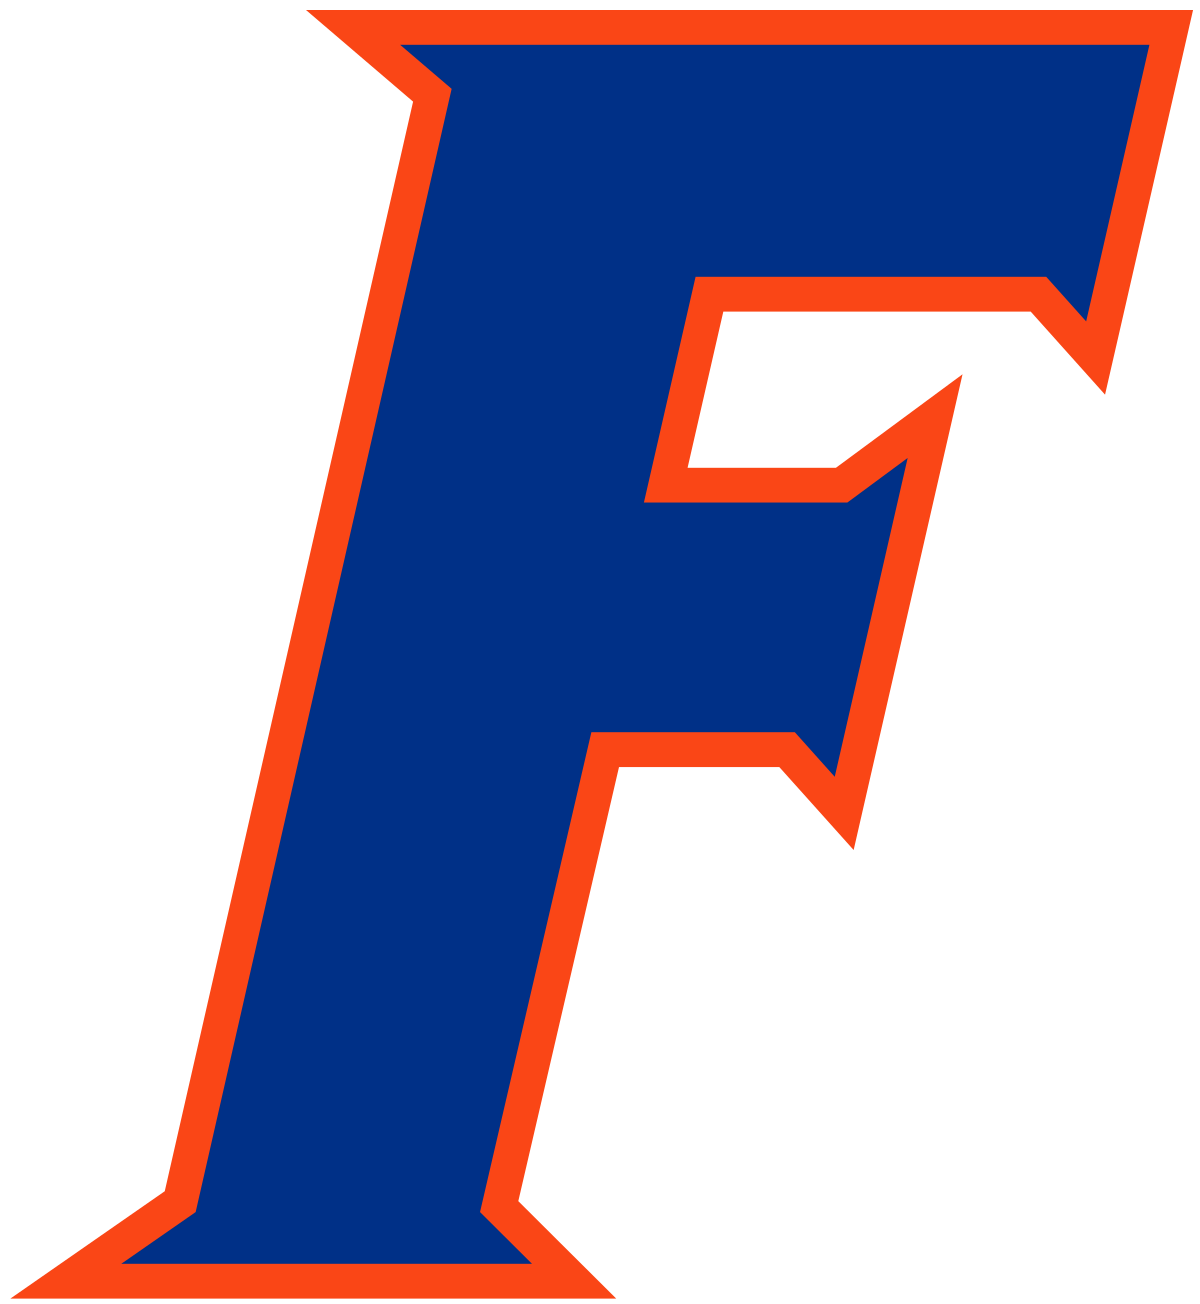 FL Gators Logo - 2018 Florida Gators baseball team